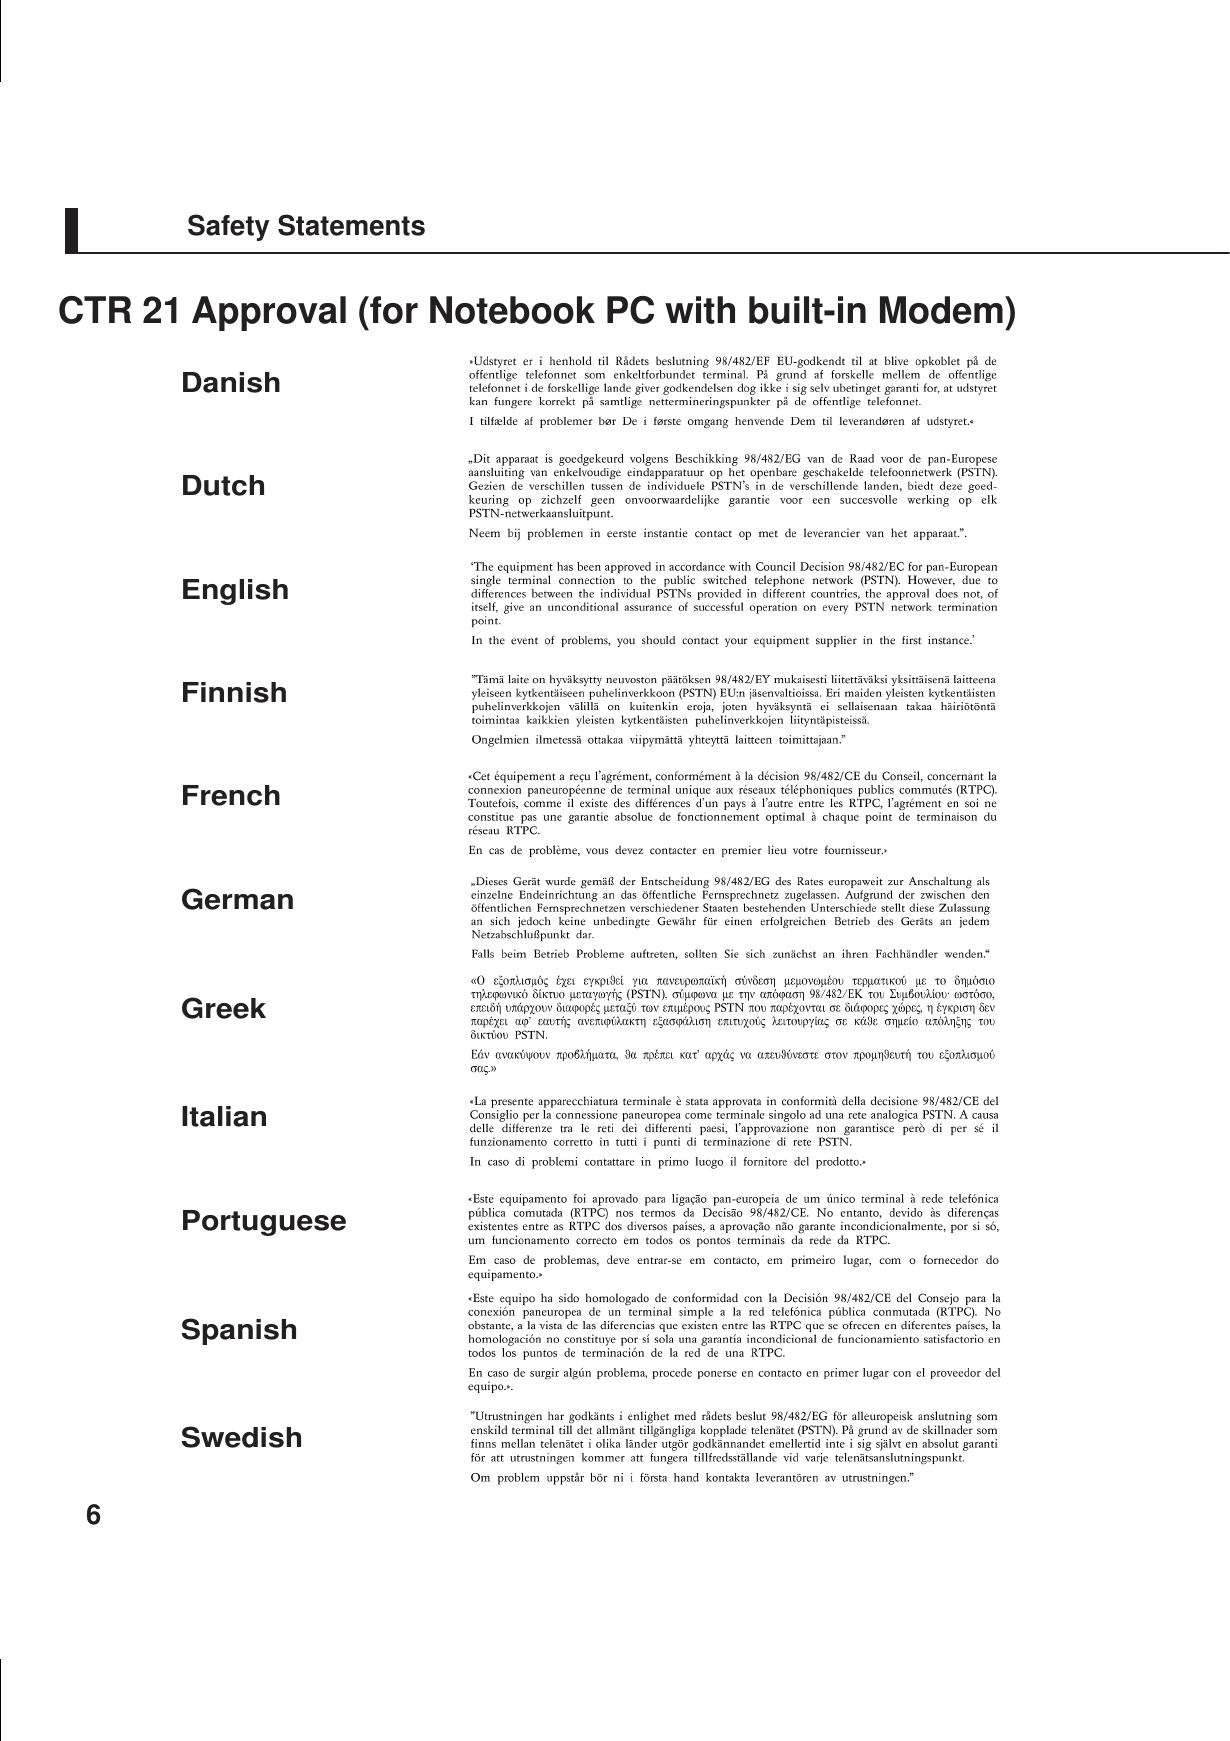 6DanishDutchEnglishFinnishFrenchGermanGreekItalianPortugueseSpanishSwedishCTR 21 Approval (for Notebook PC with built-in Modem)Safety Statements